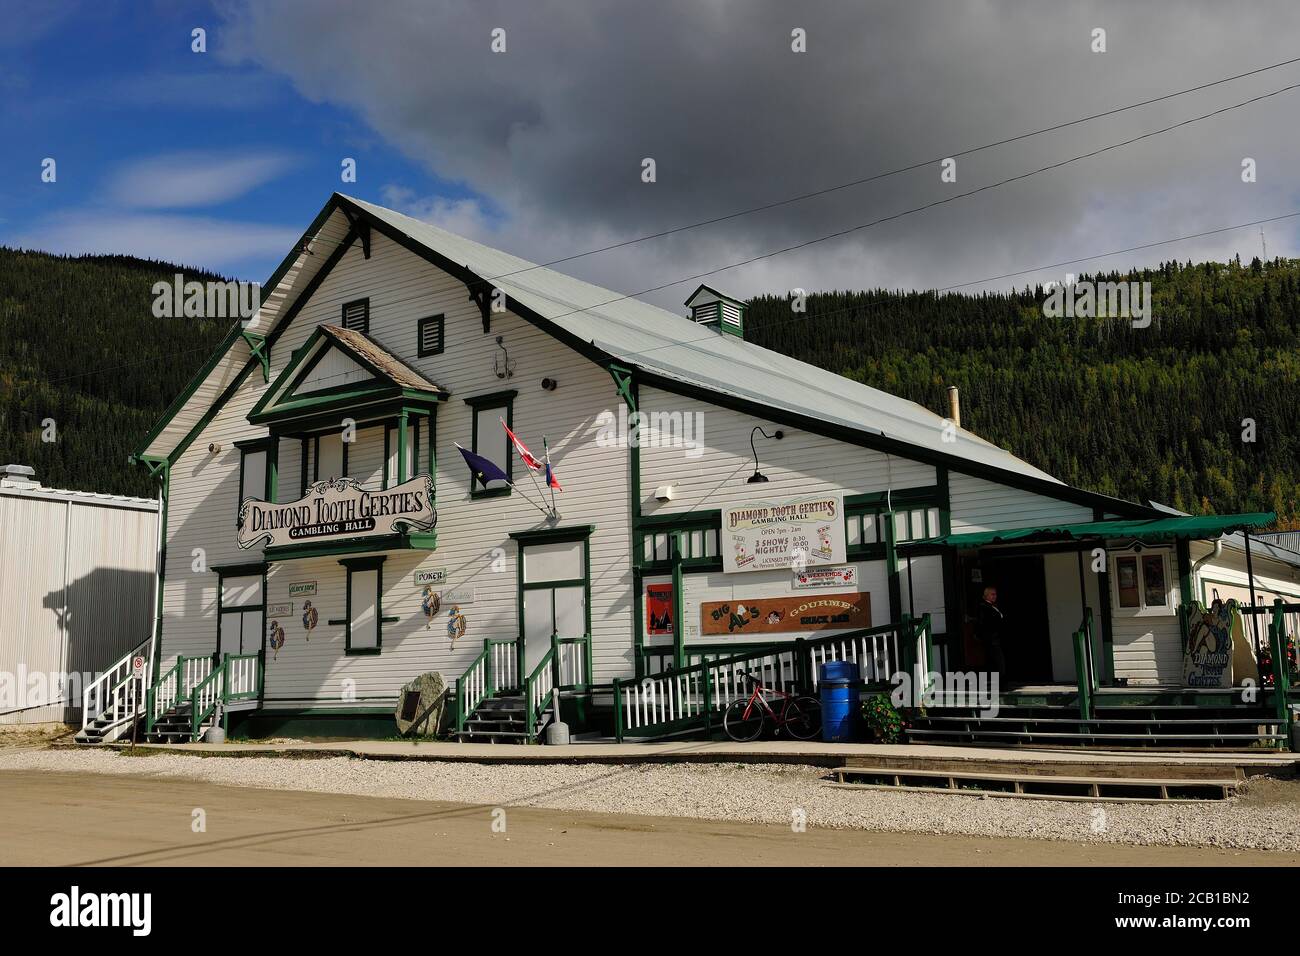 Diamond Tooth Gerties Gambling Hall, Canada's oldest casino, Dawson City, Yukon Territory, Canada Stock Photo